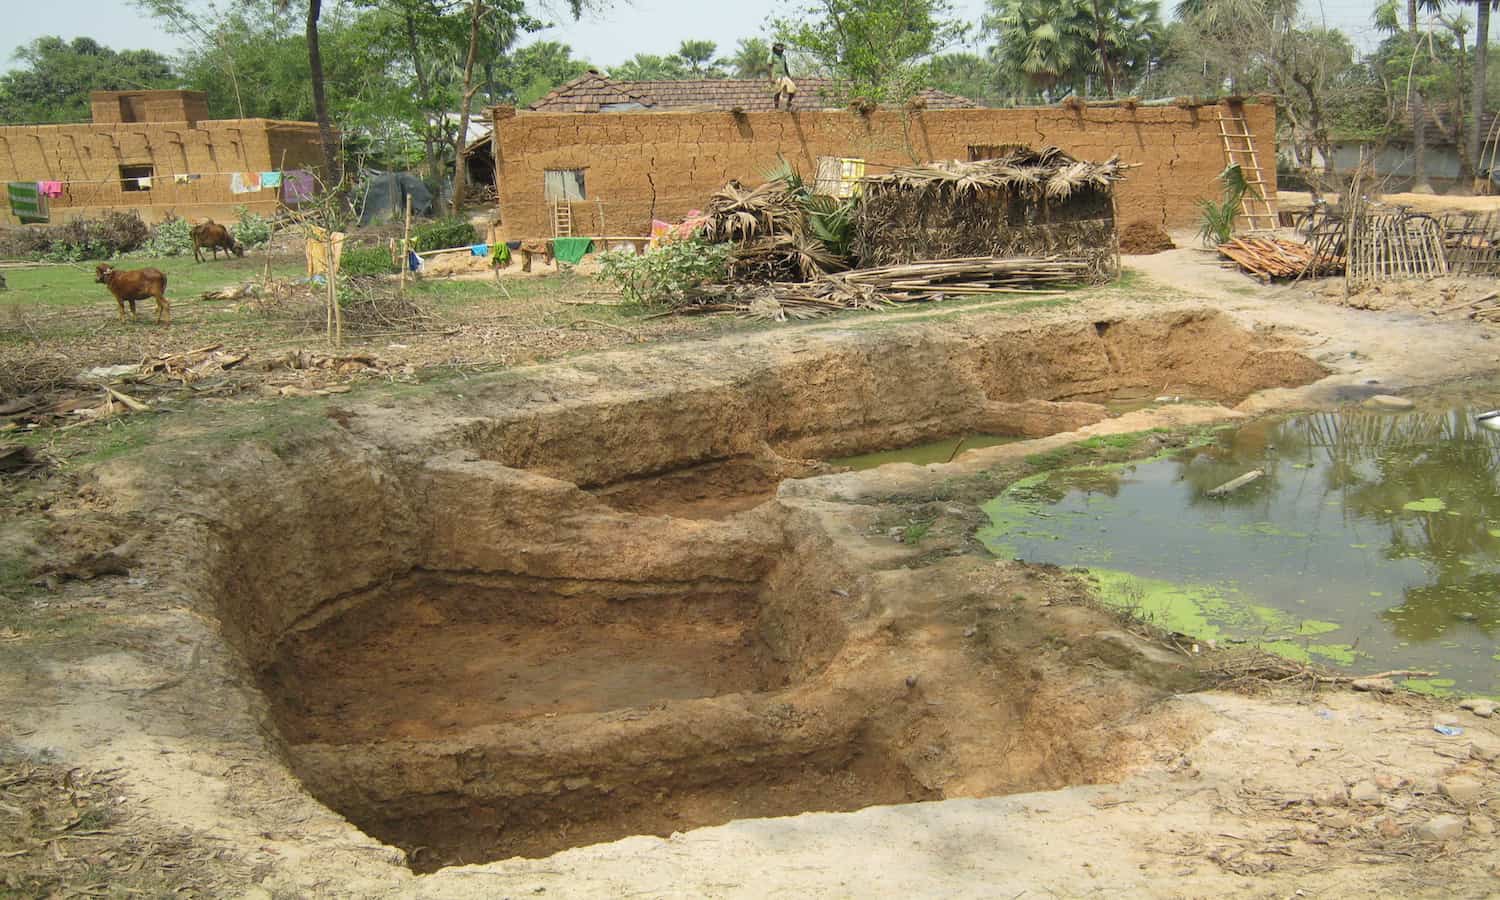 Rajadighi社区卫生服务社会的Doba生计项目正在帮助印度农民应对气候变化通过节约用水。